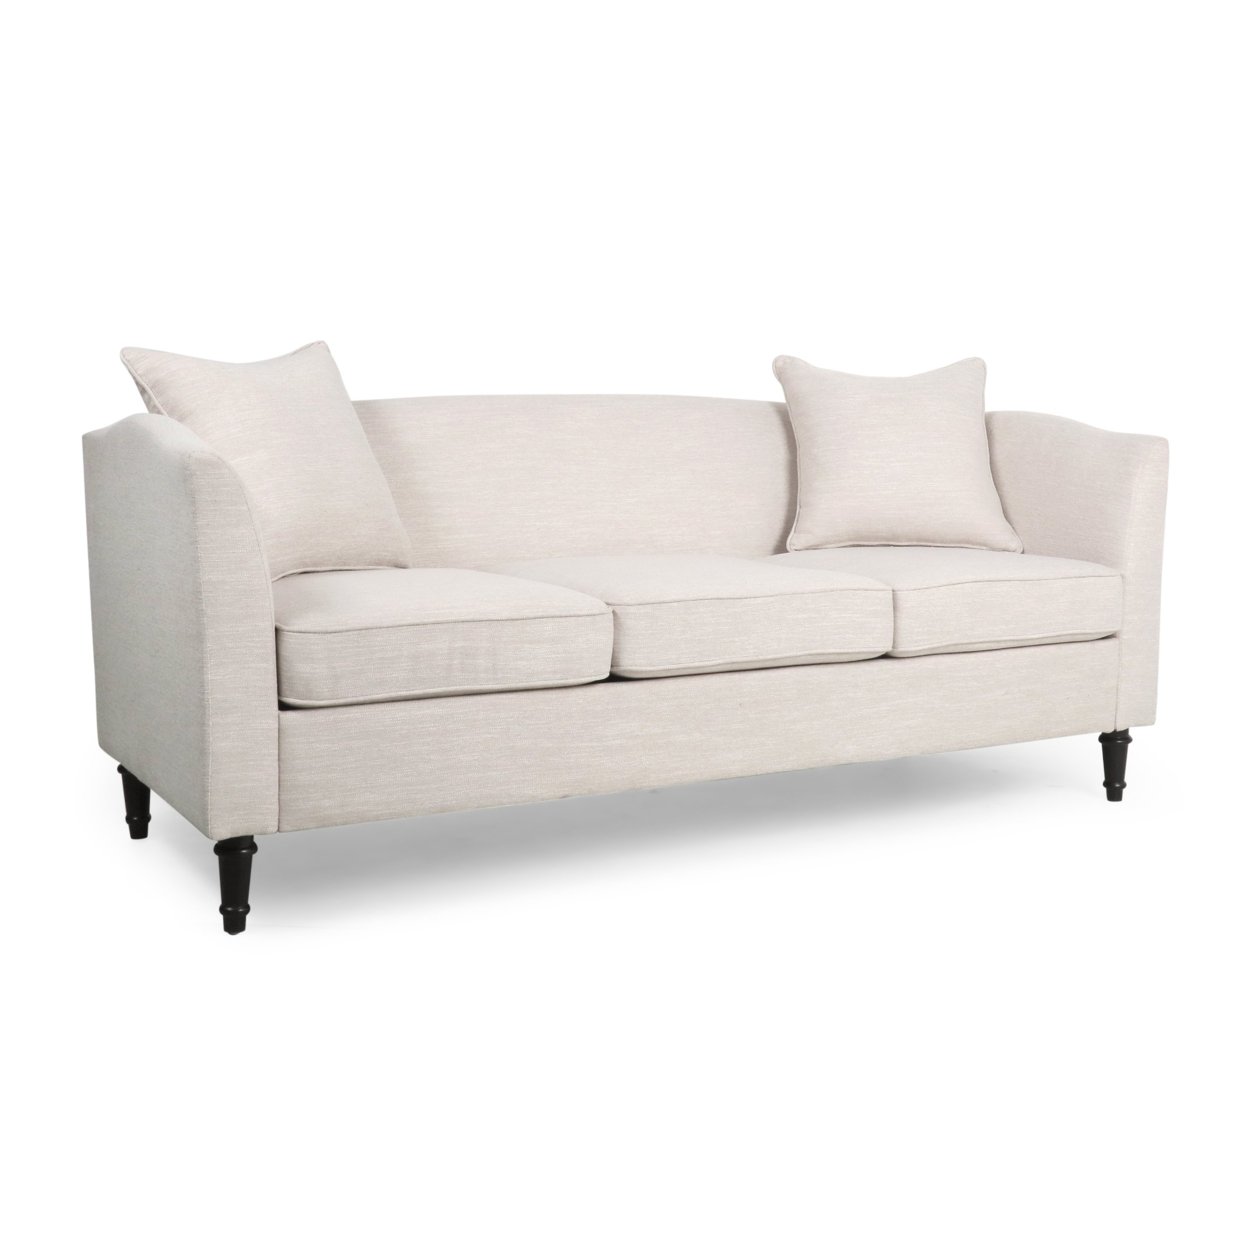 Doerun Contemporary Upholstered 3 Seater Sofa - Dark Brown/beige